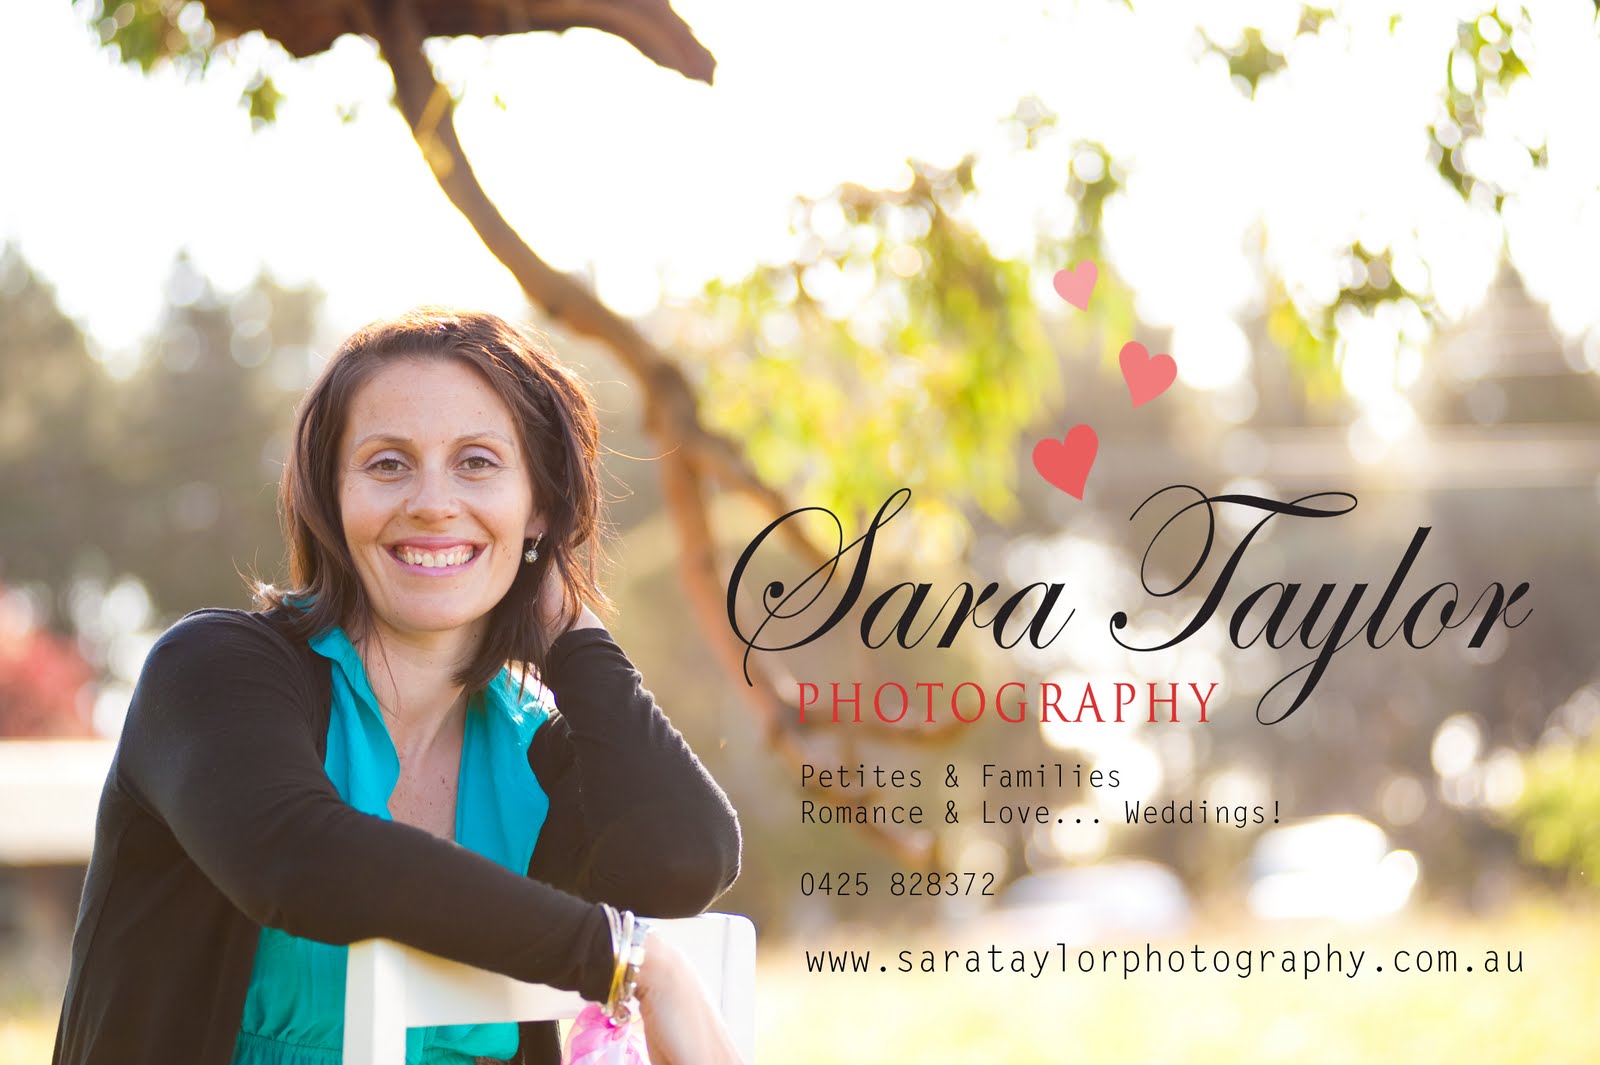 Sara Taylor Photography Blog